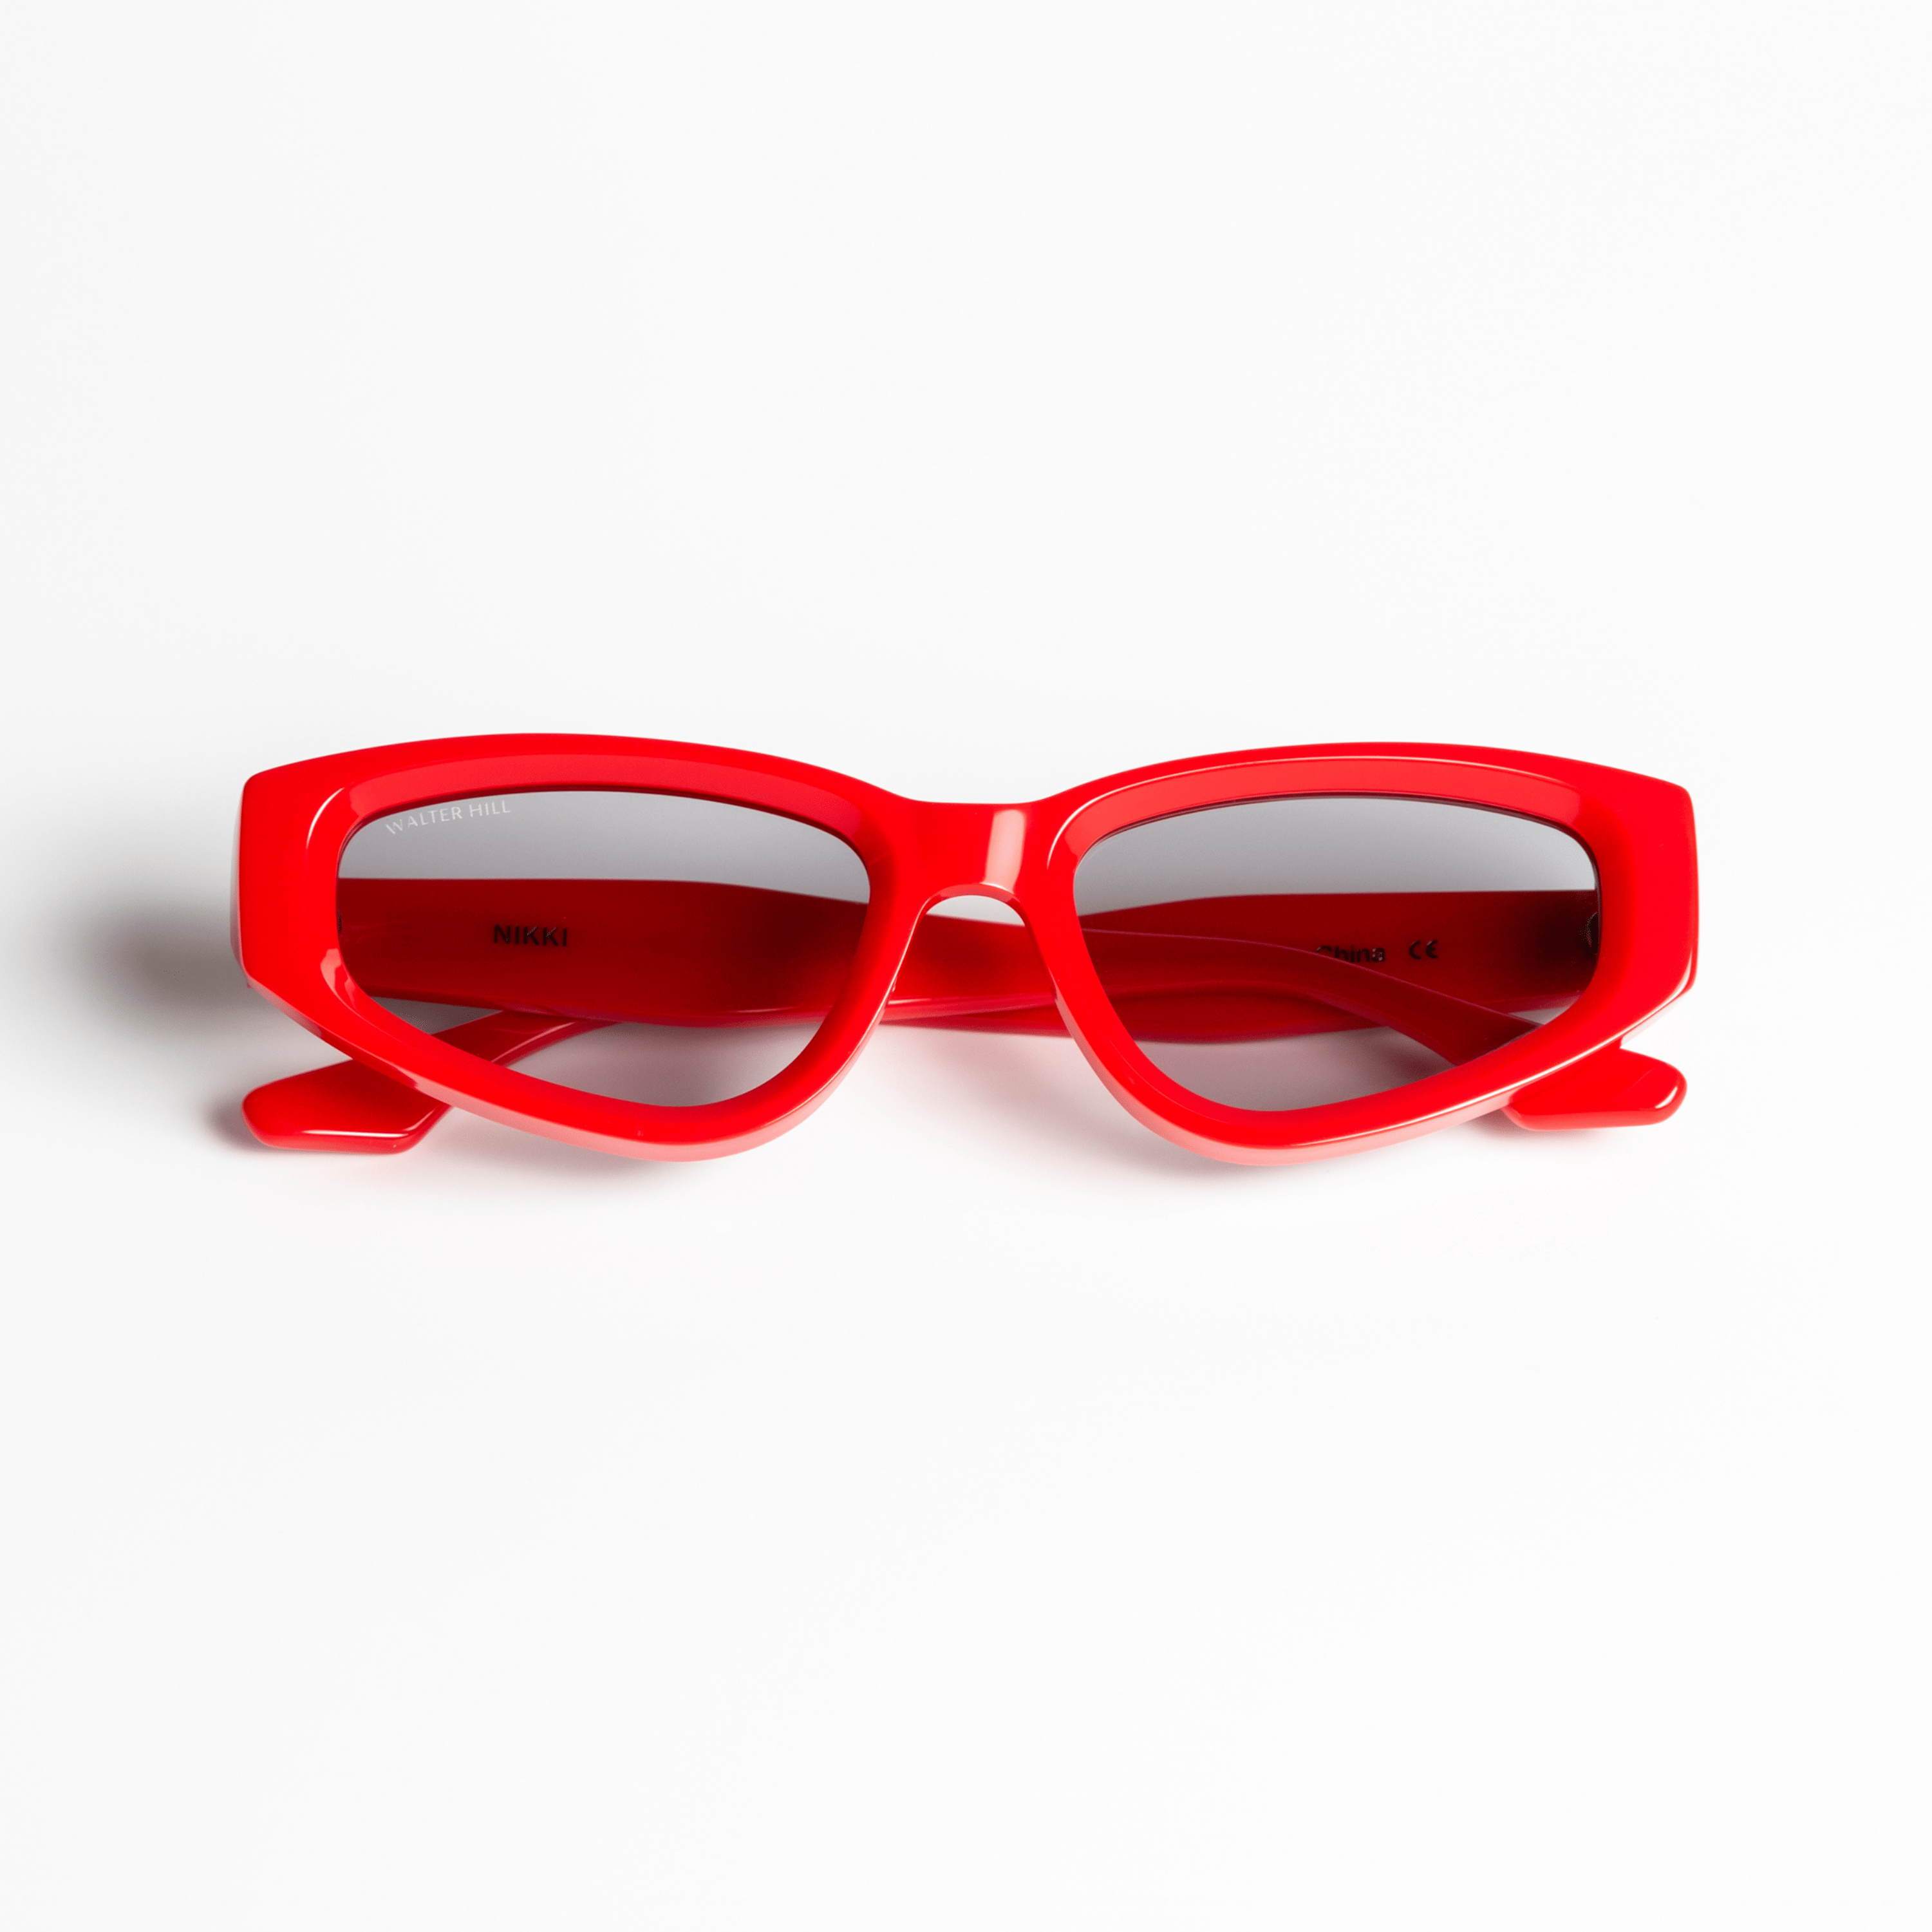 Walter Hill Sunglasses Red / Standard / Polarized Cat.3 NIKKI - Red